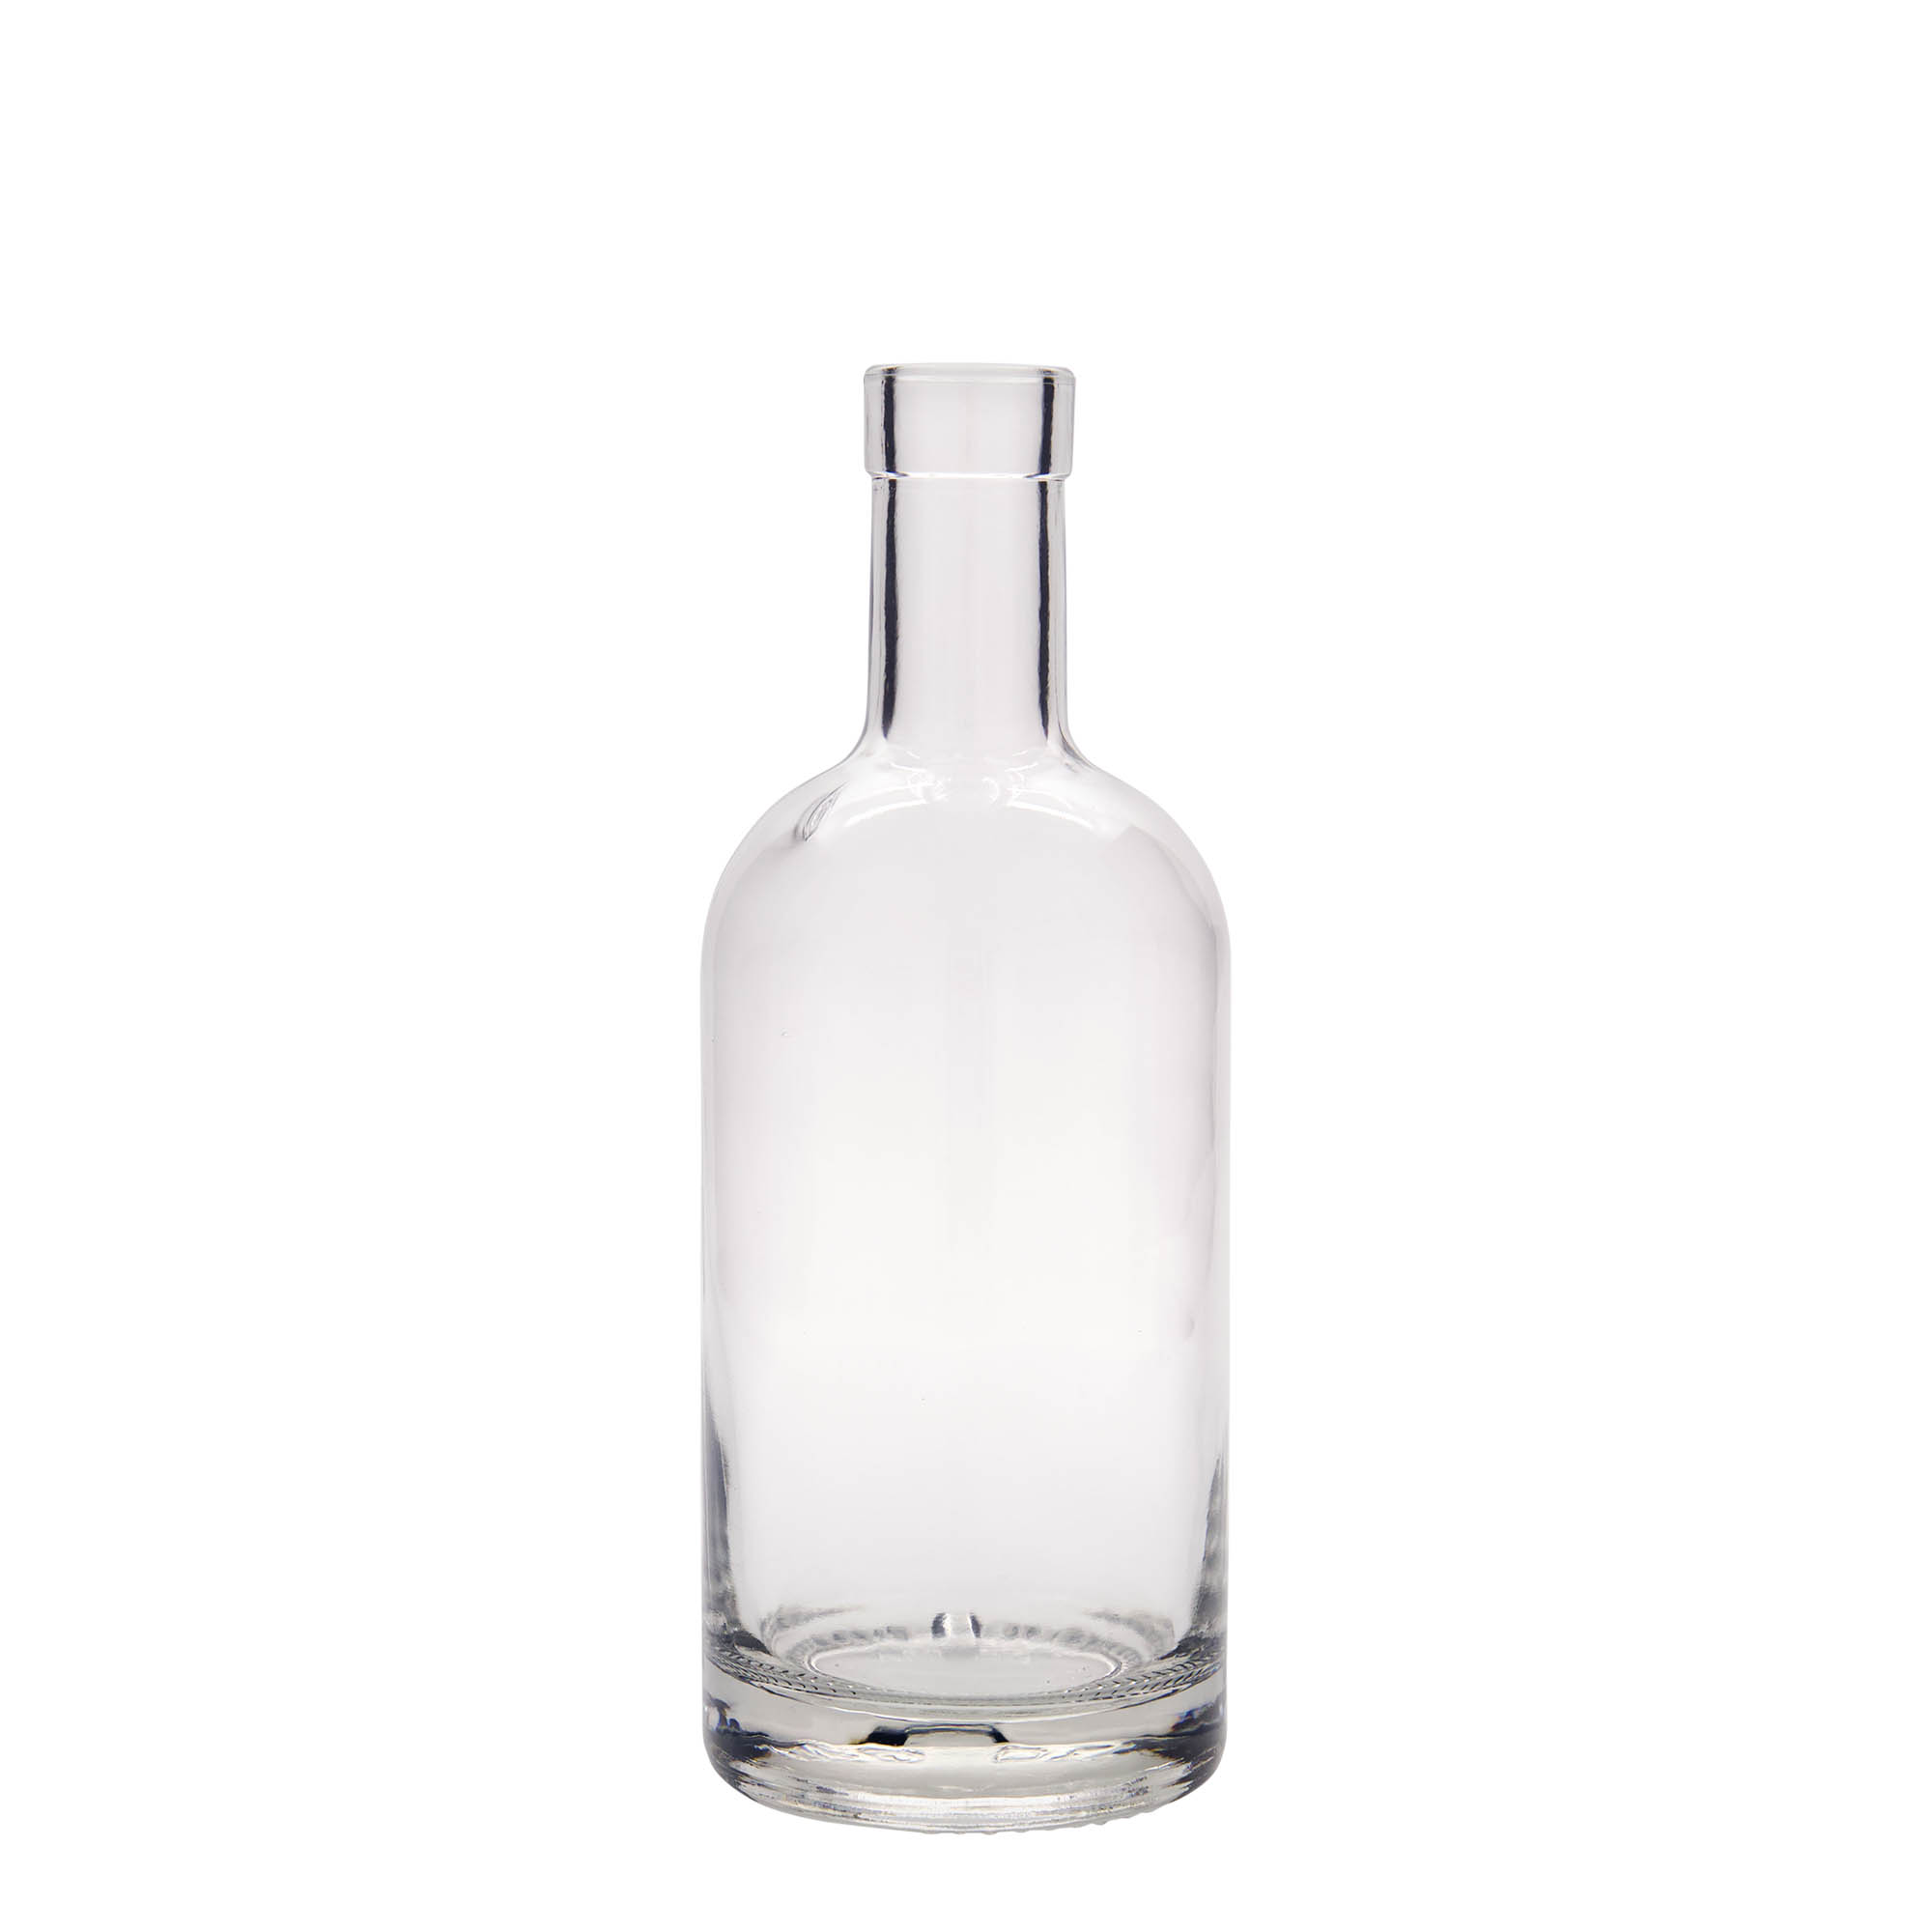 500 ml glass bottle 'Franco', closure: cork